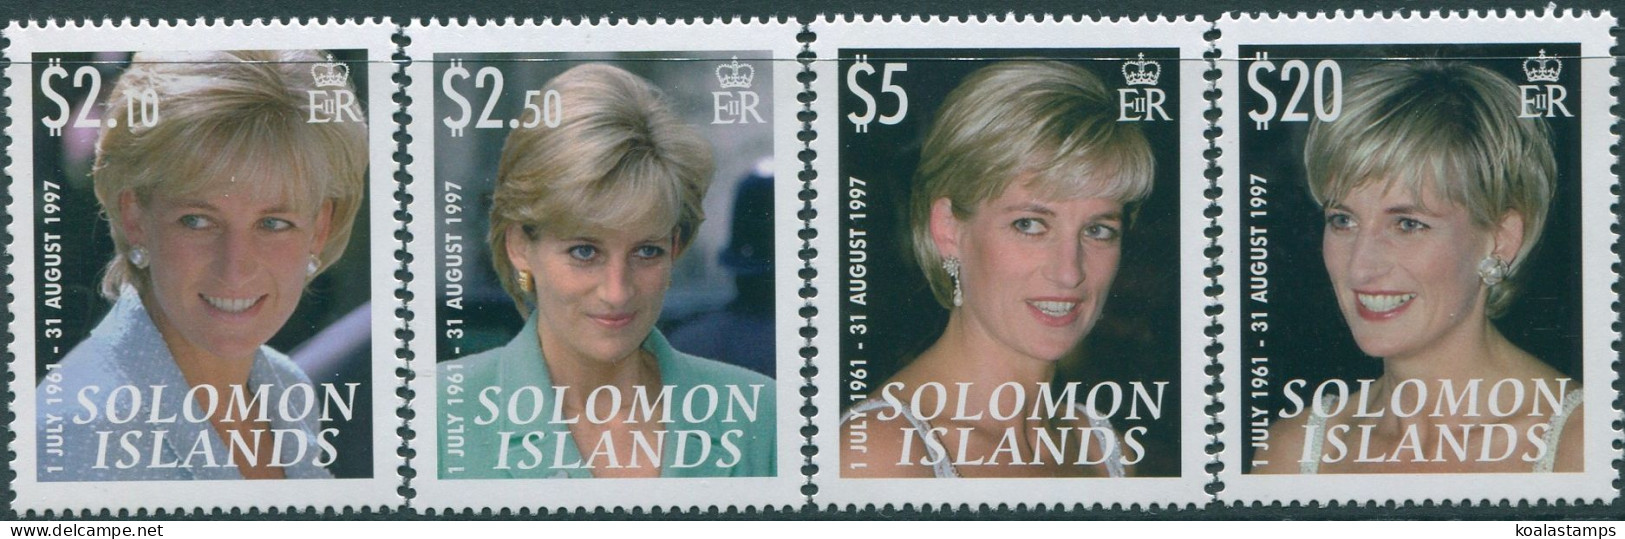 Solomon Islands 2007 SG1228-1231 Princess Diana Memory Set MNH - Solomon Islands (1978-...)